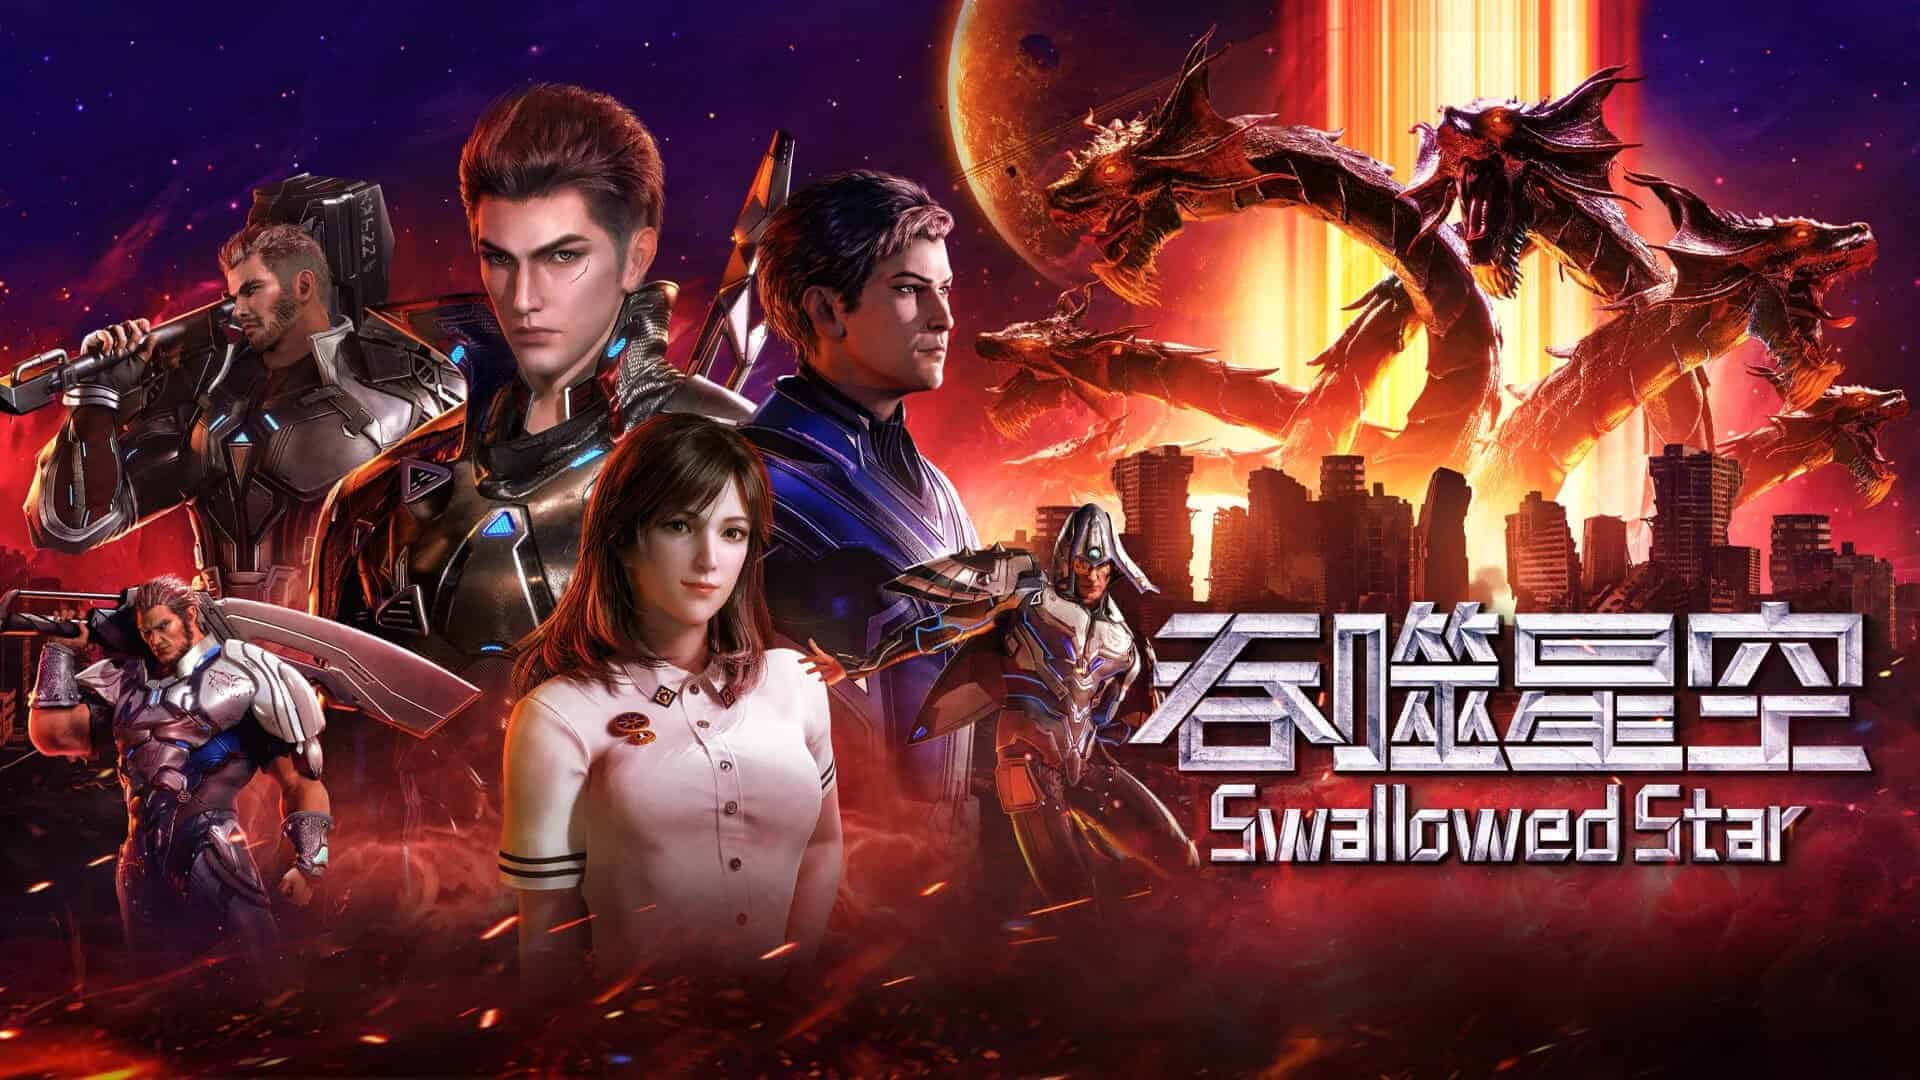 Swallowed Star Episode 84 release date details